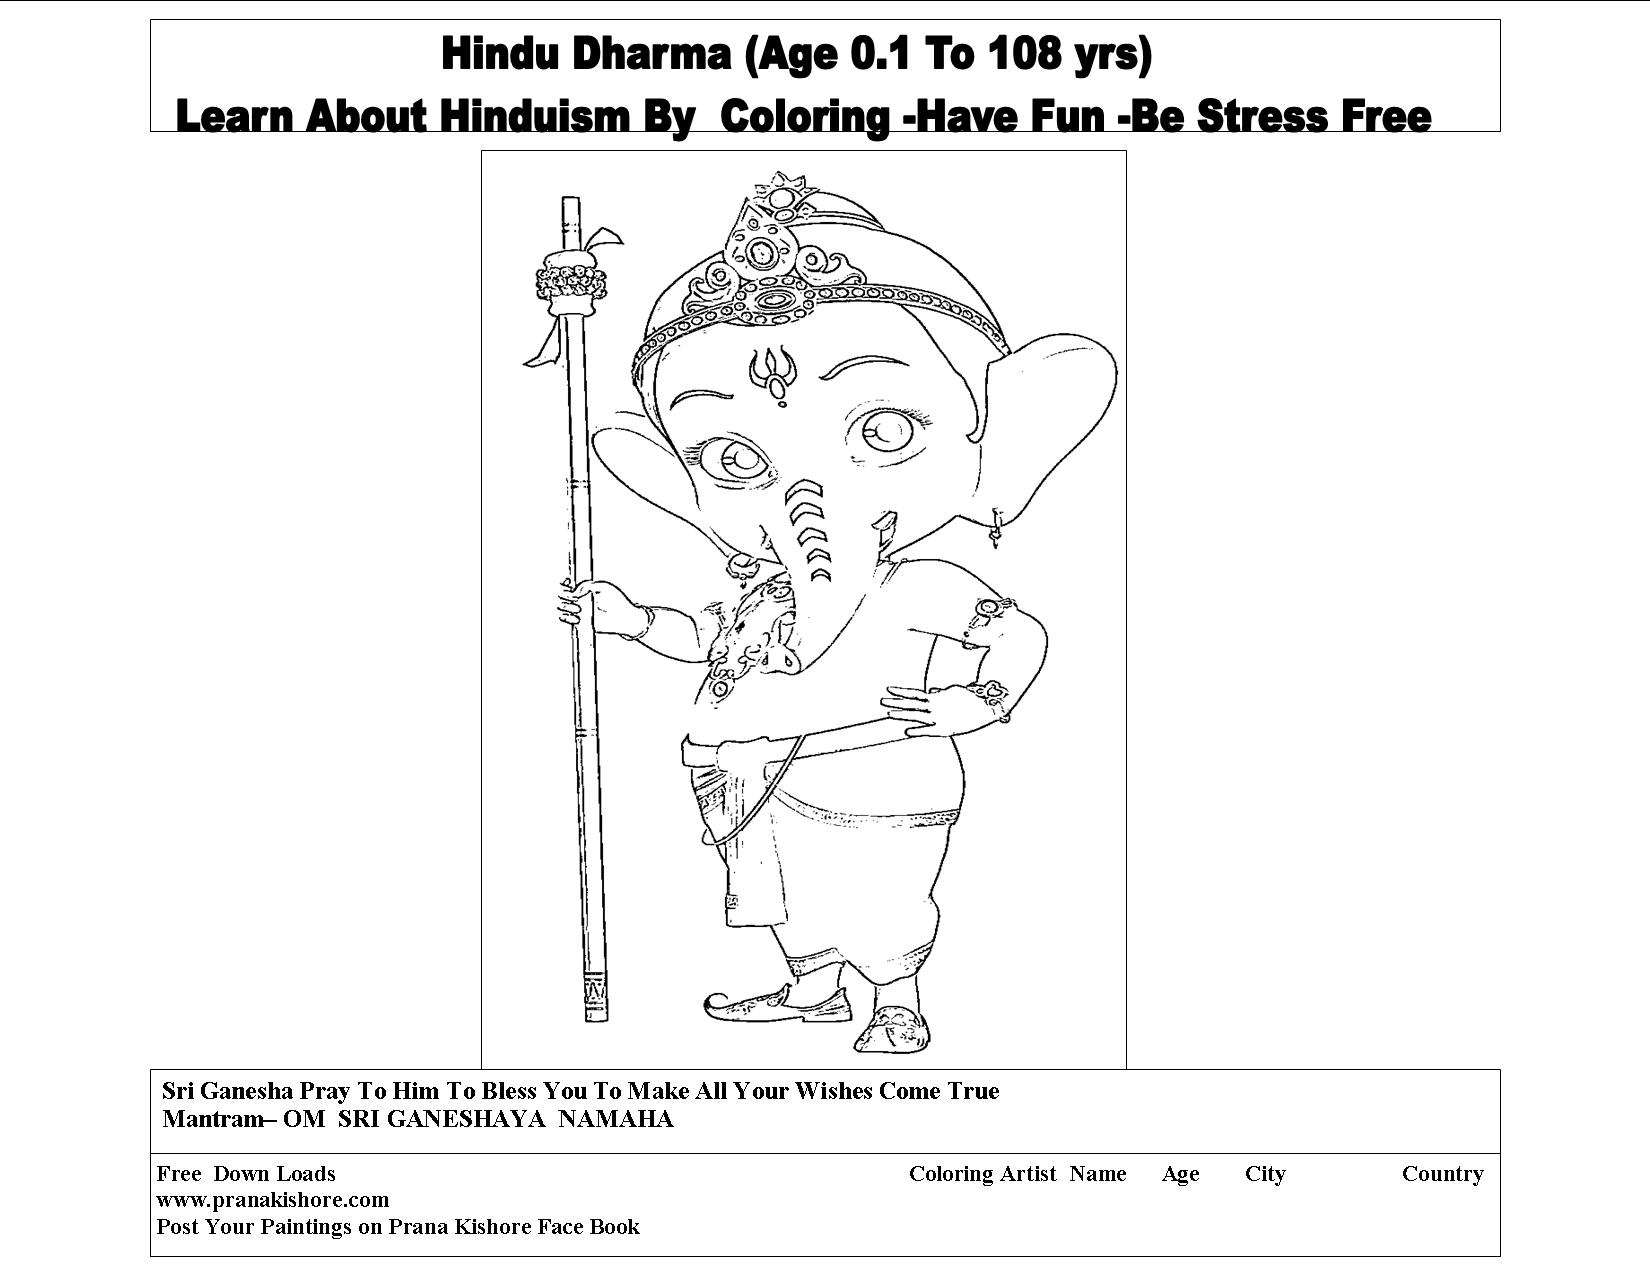 Hindu Dharma Coloring-Sri Ganesha Standing